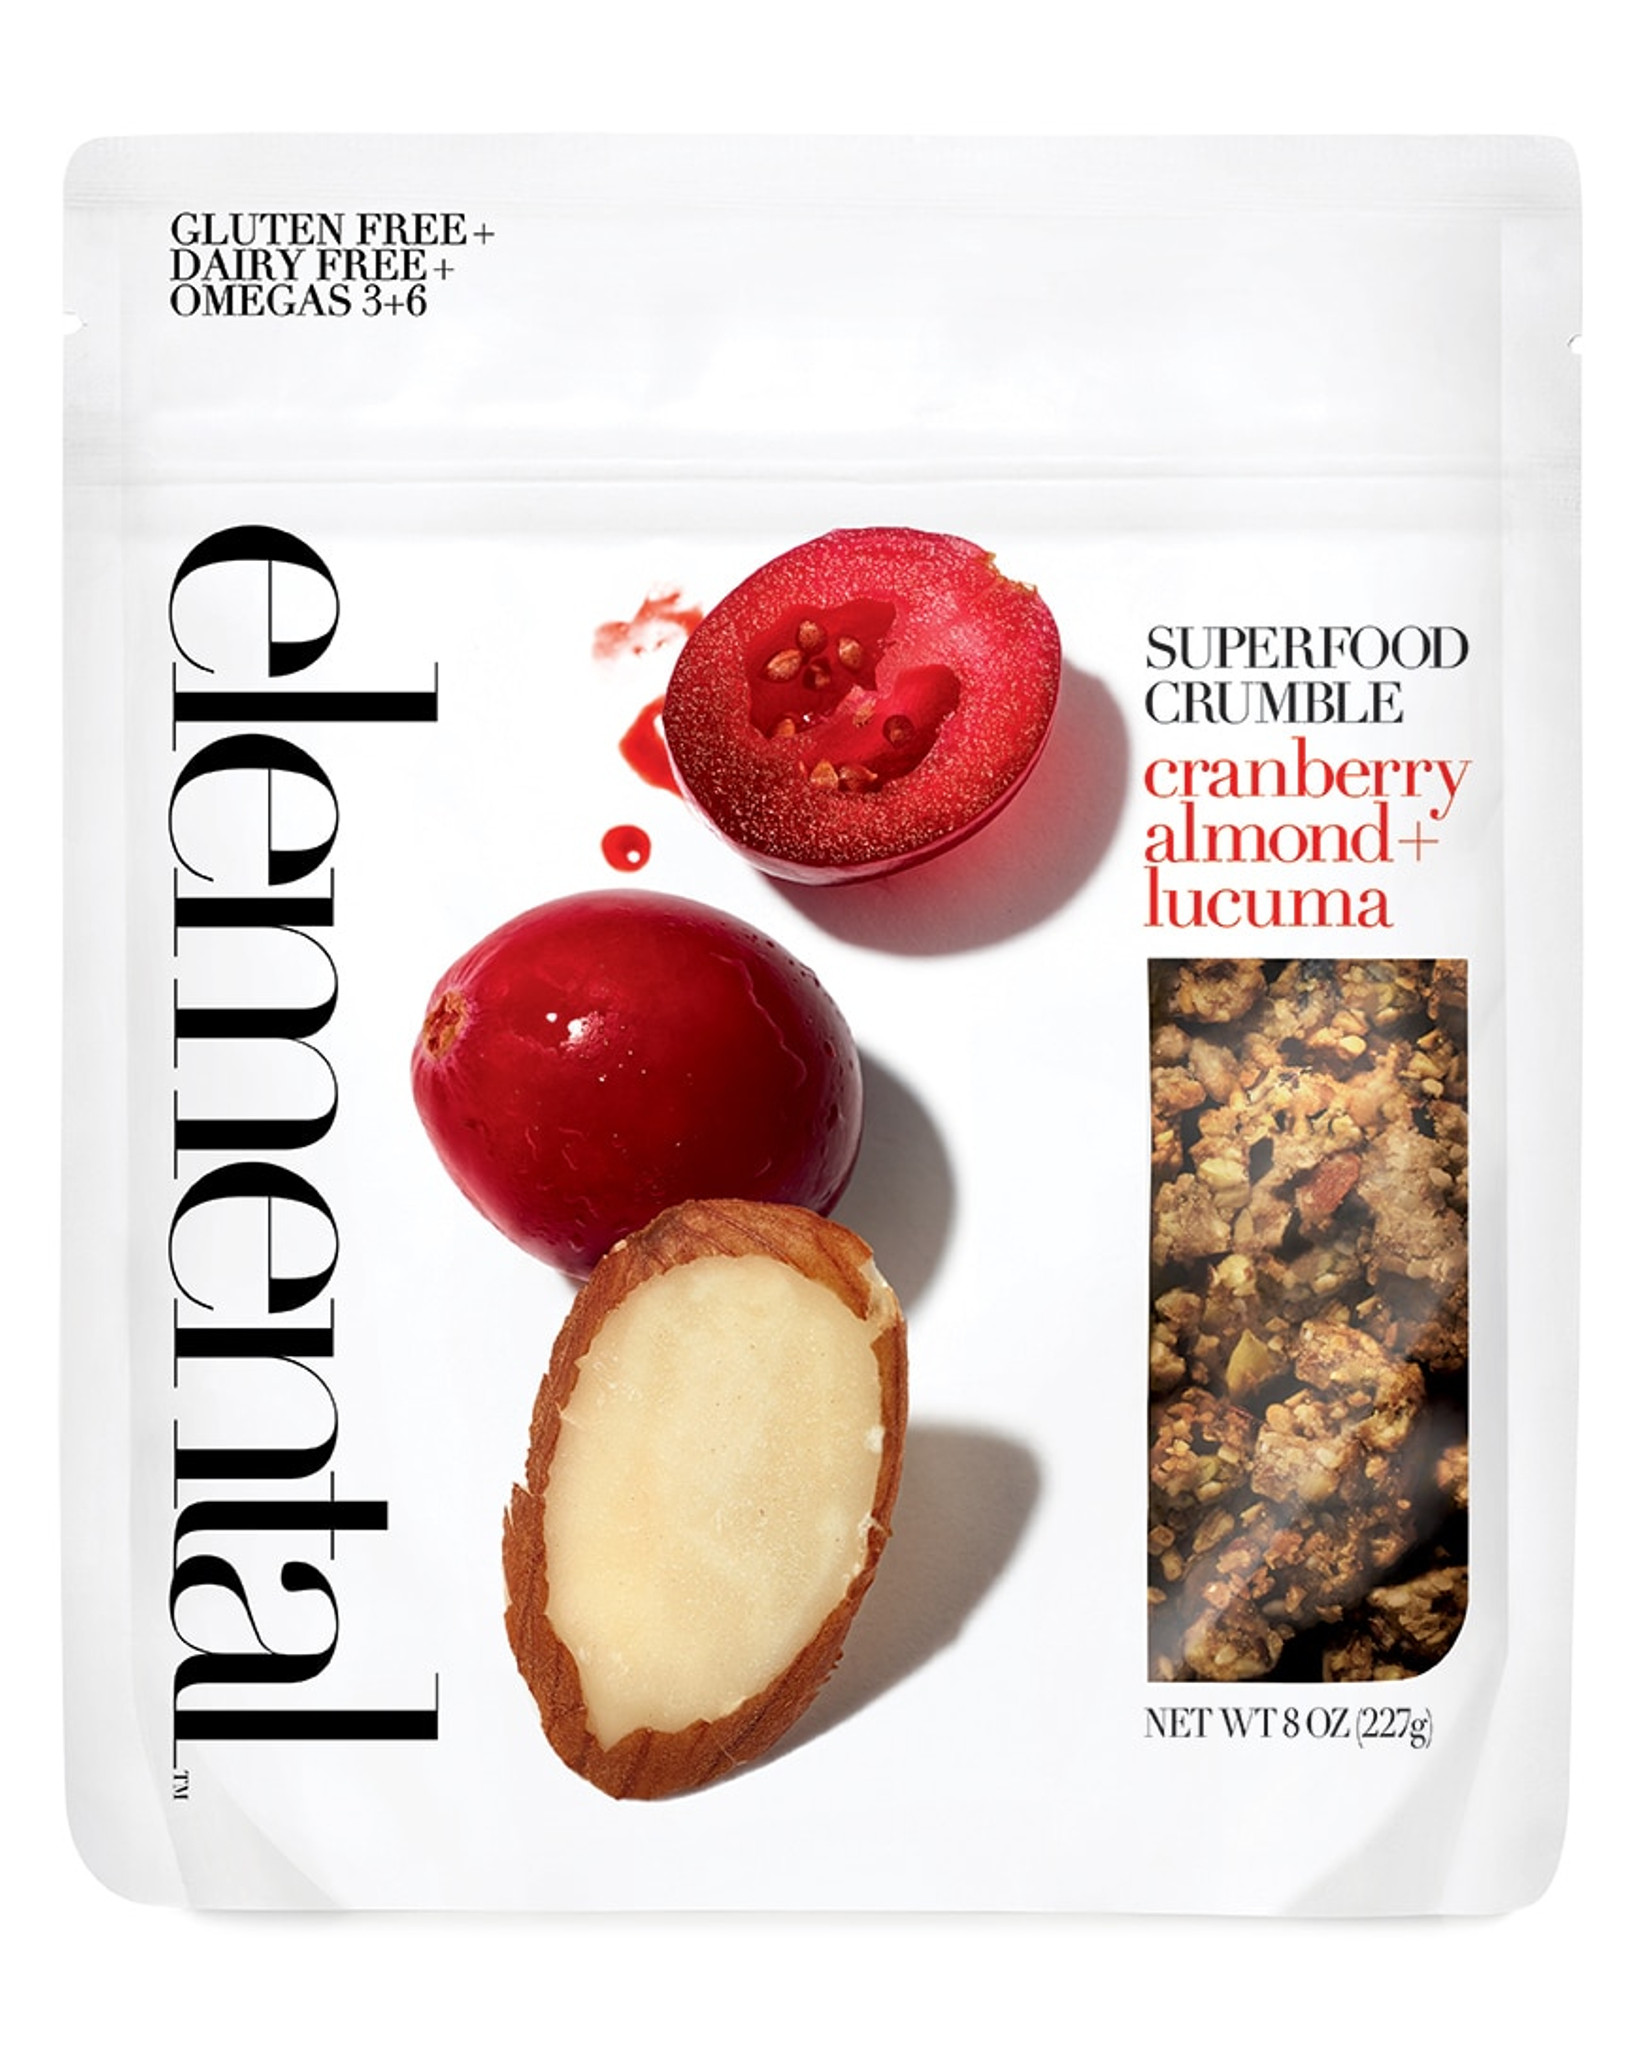 Crumble Cranberry Almond + Lucuma